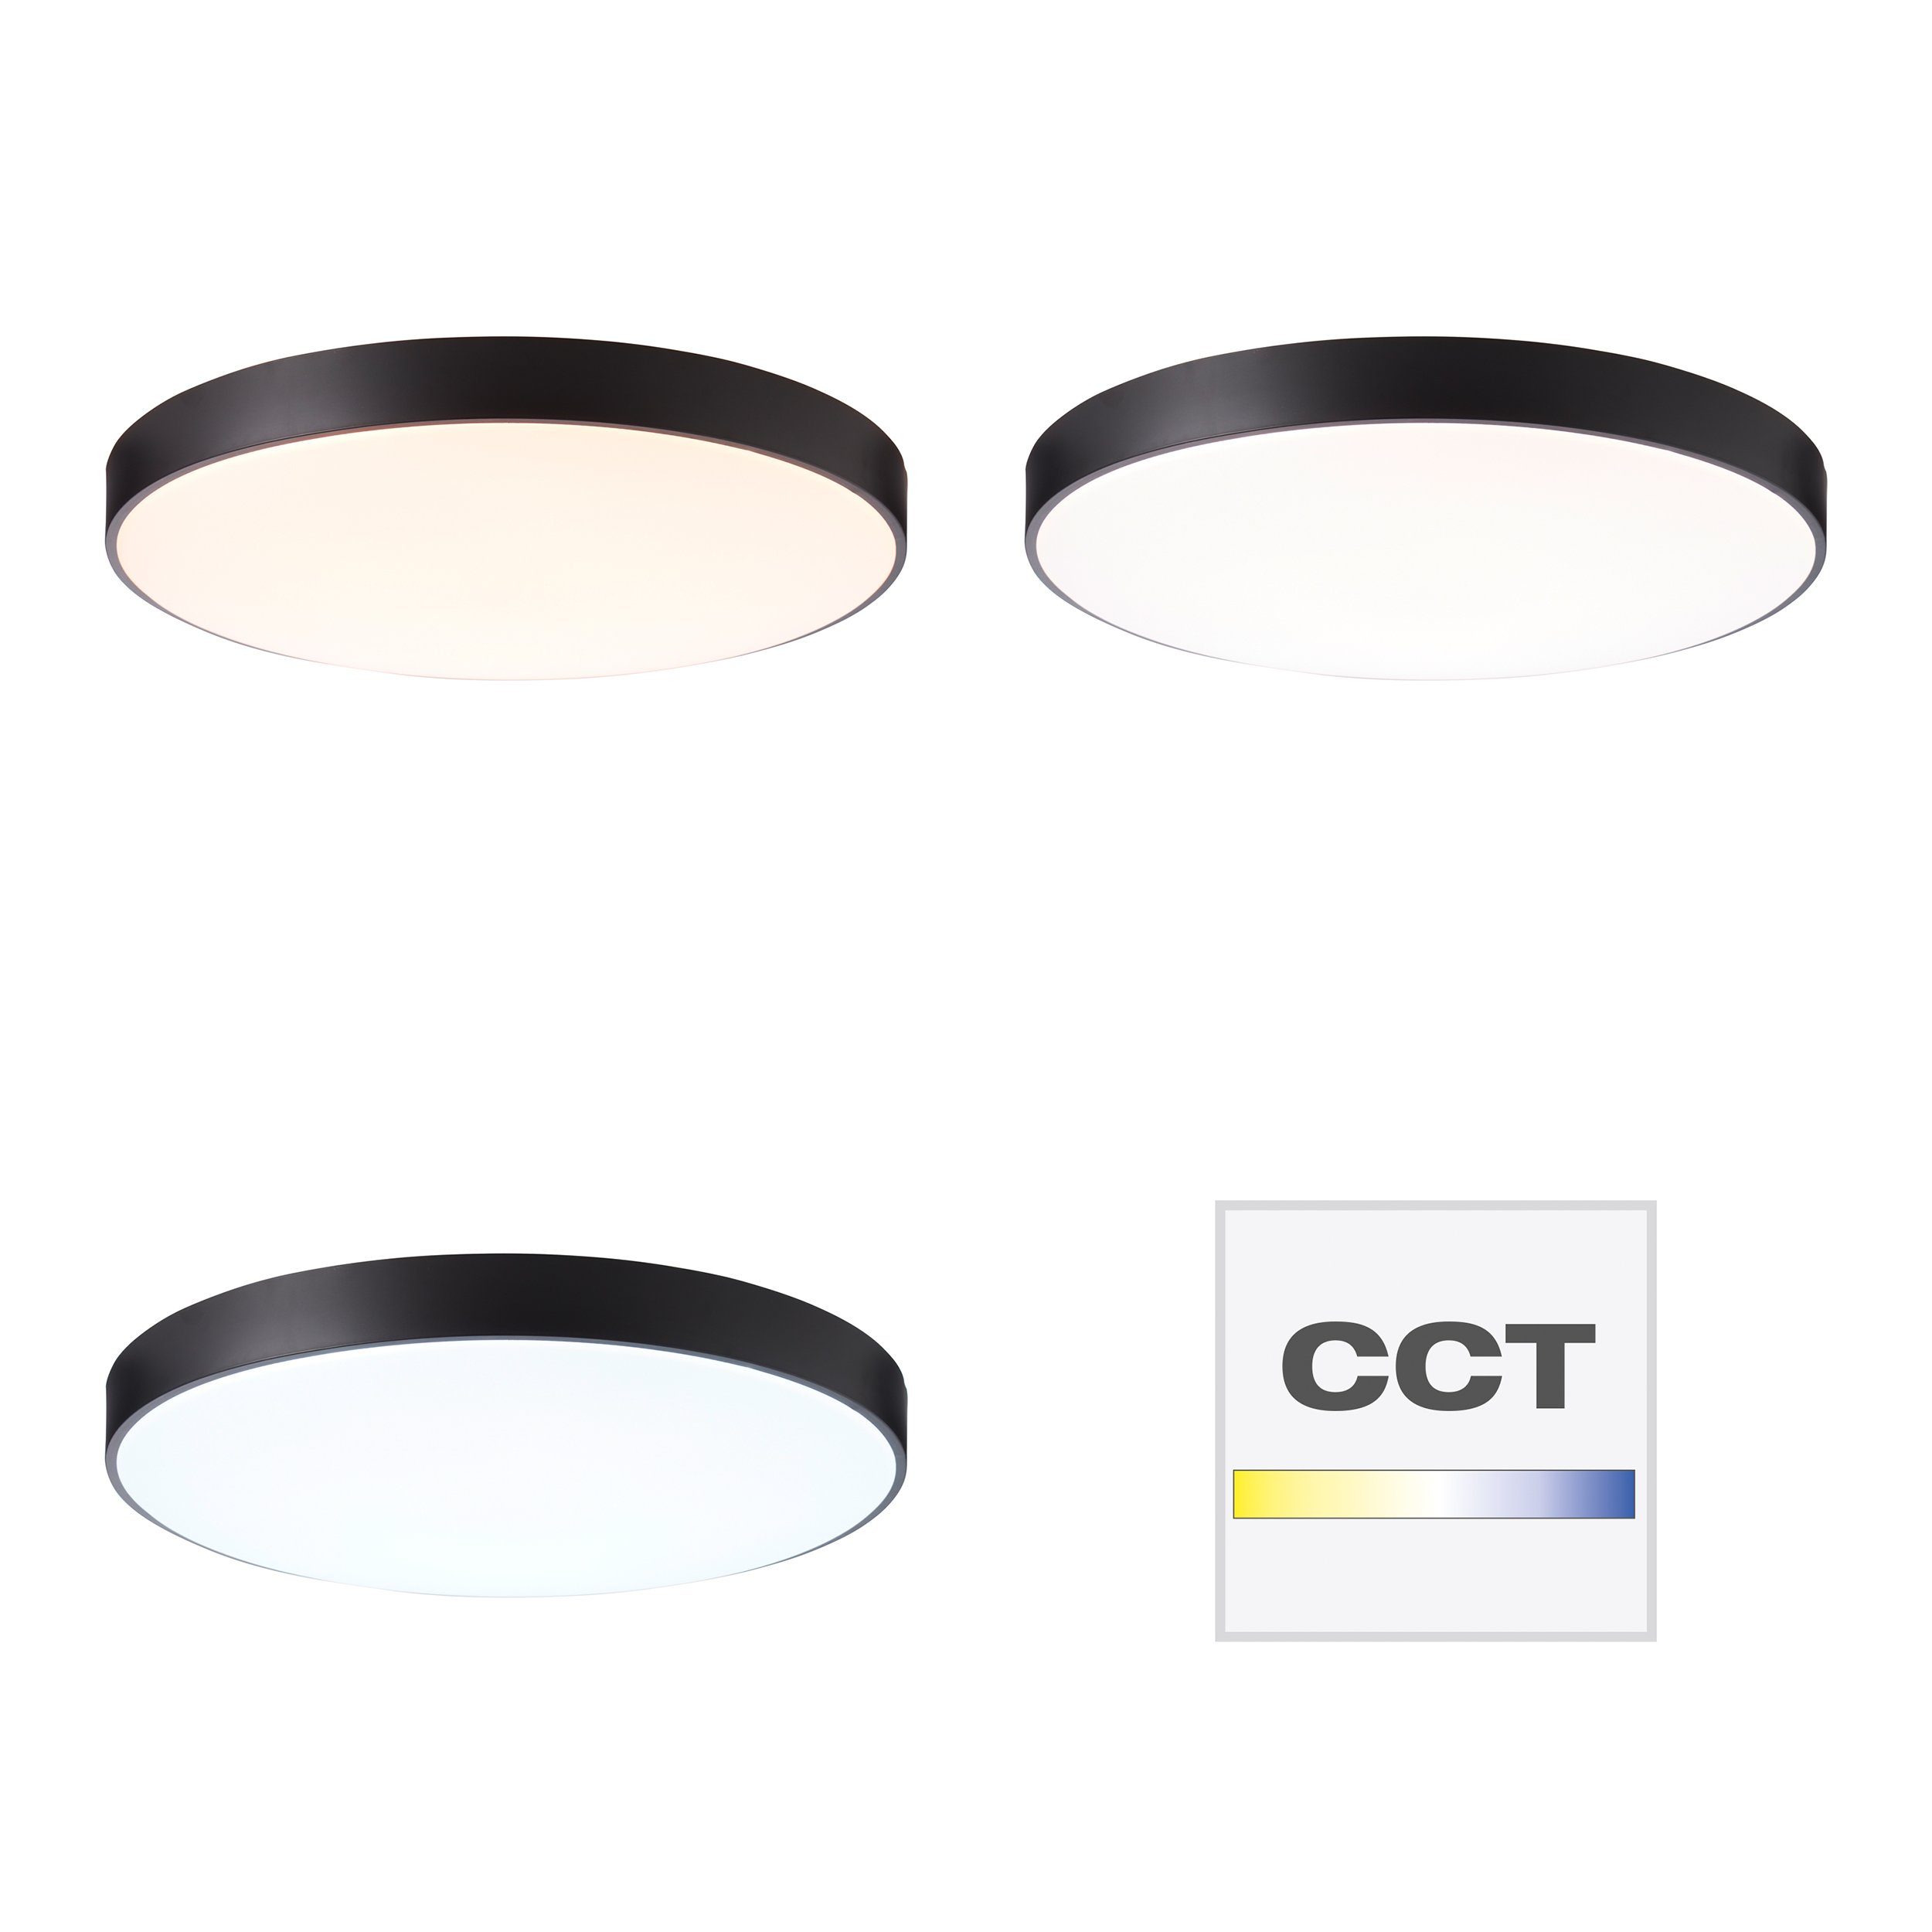 Lightbox LED Ø XXL, cm, 8800 fest CCT, Deckenlampe warmweiß - schwarz dimmbar, 78 integriert, LED Dimmfunktion, LED kaltweiß, Deckenleuchte, lm